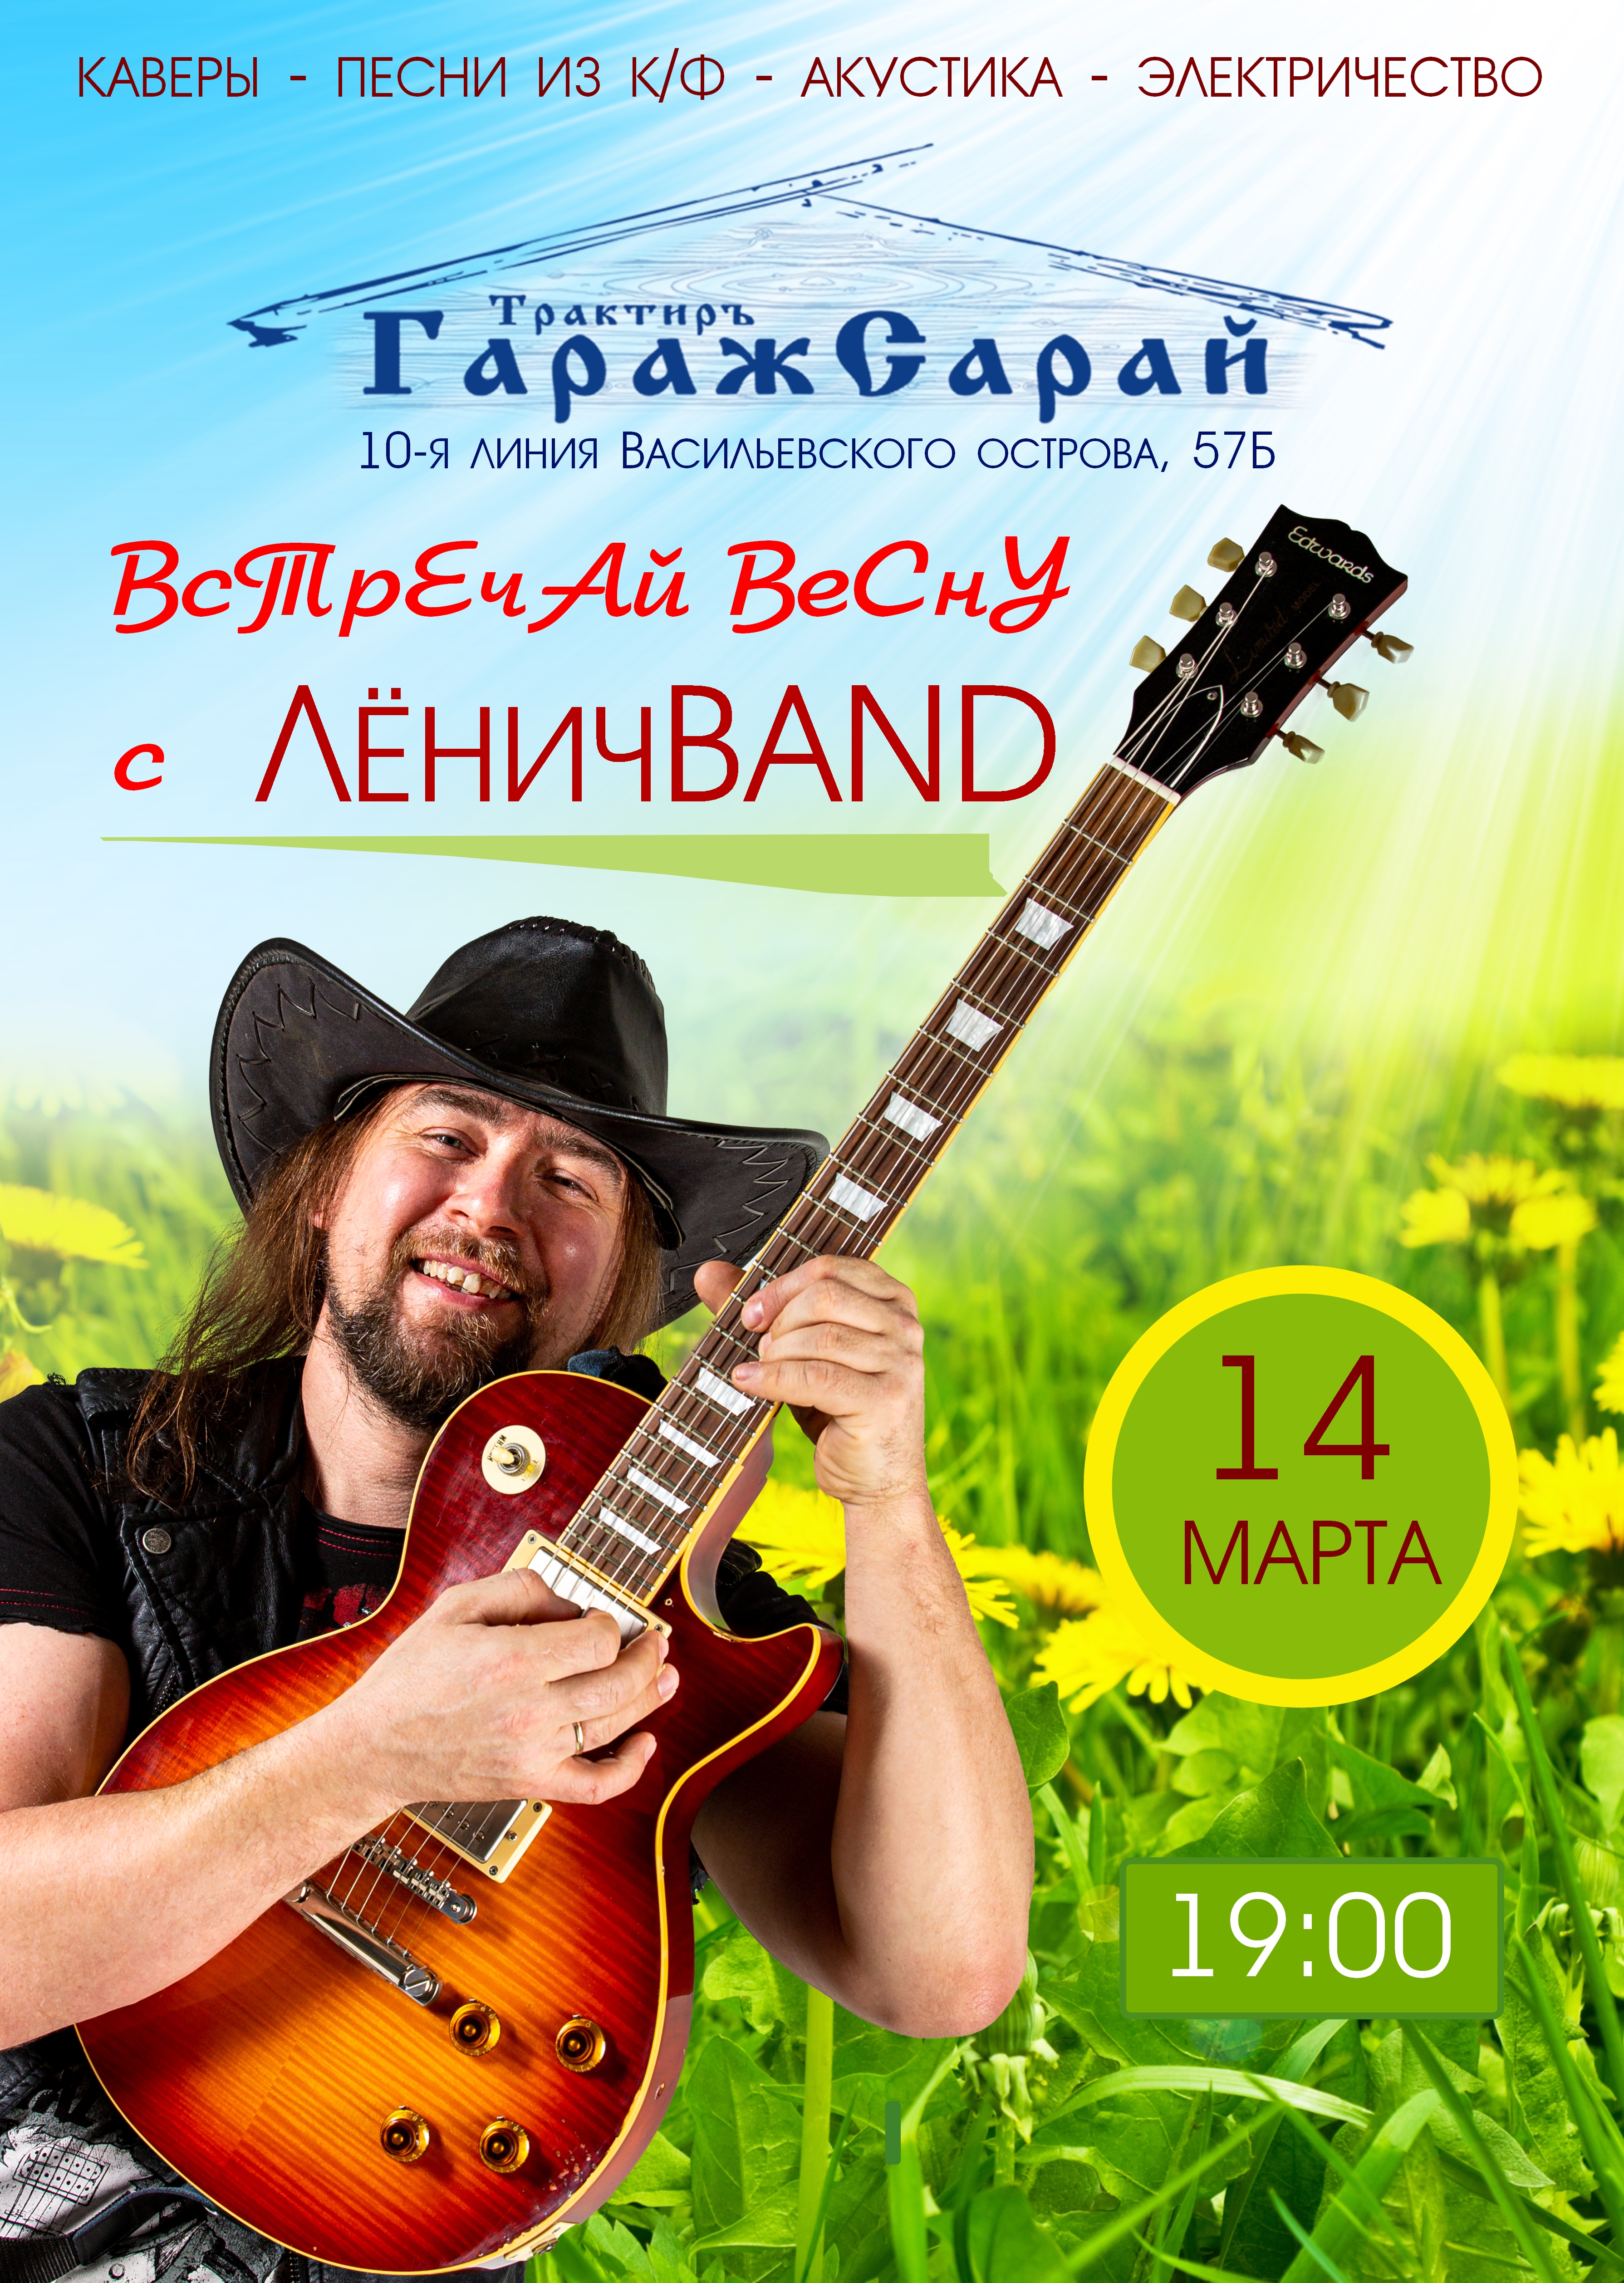 ЛёничBAND 14 марта 2021, концерт в ГаражСарай, Санкт-Петербург